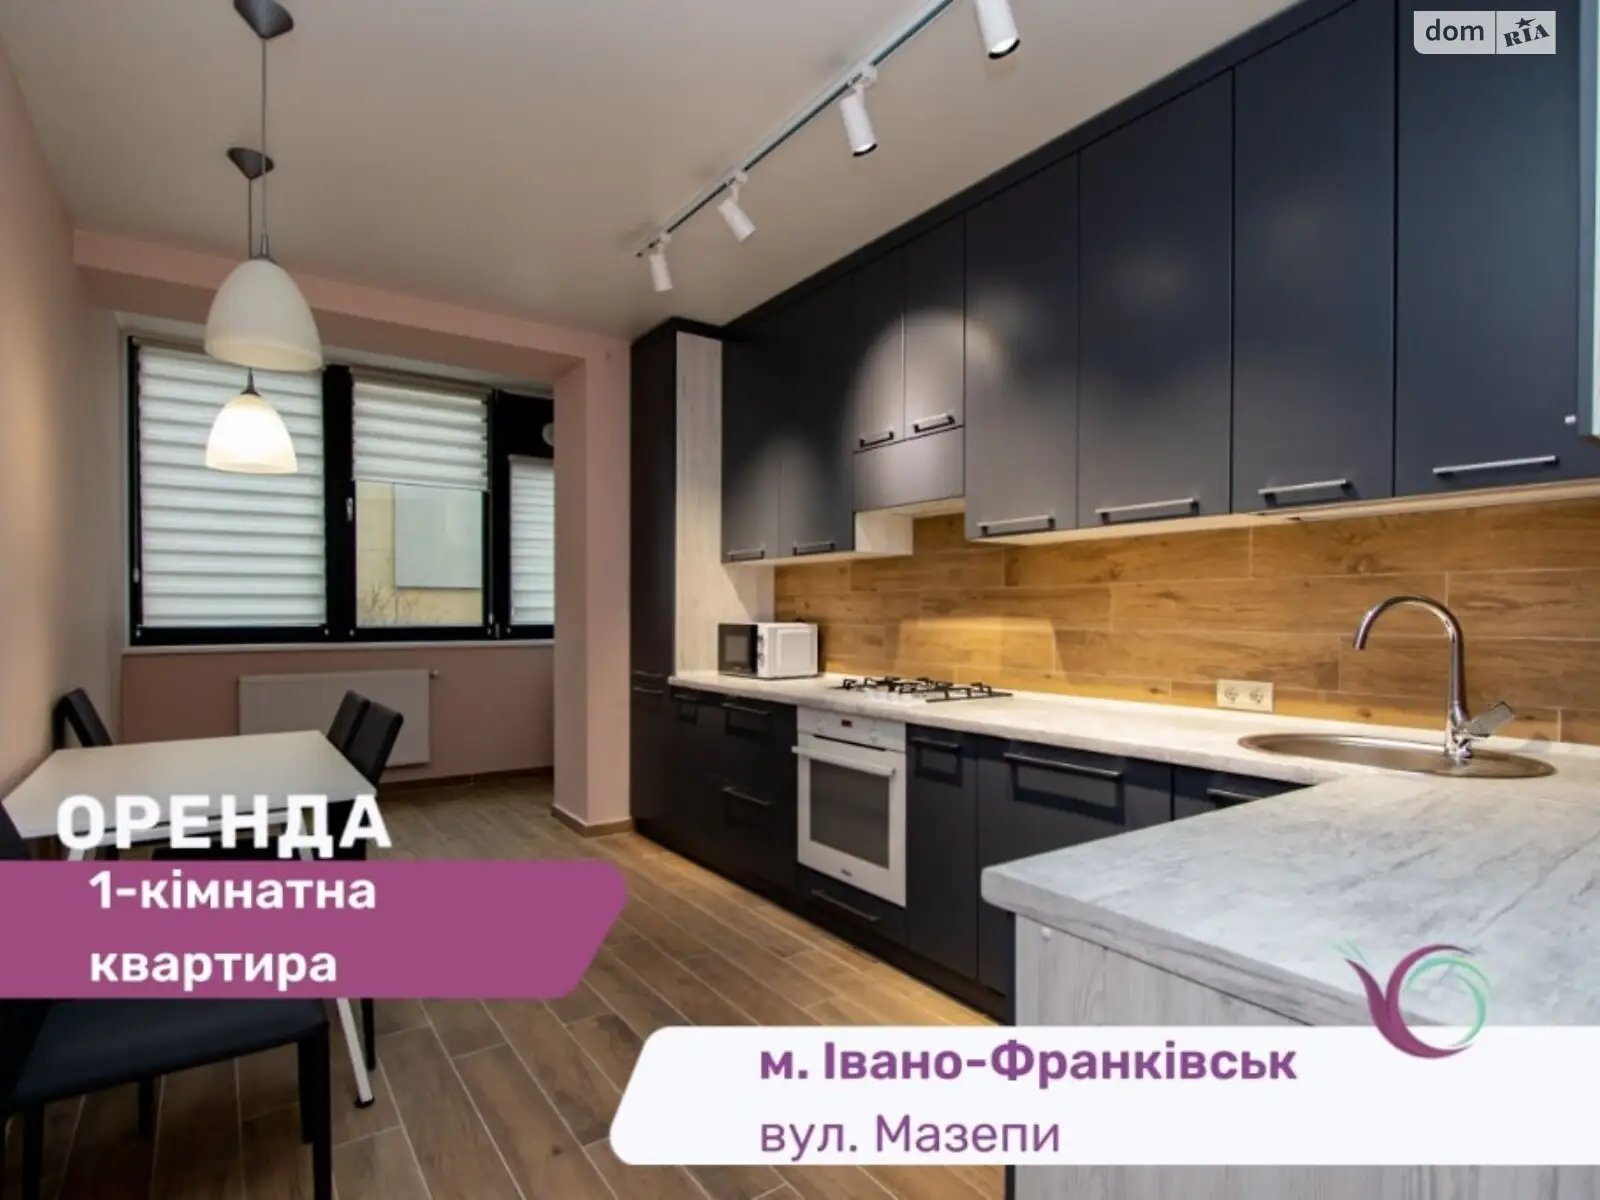 Сдается в аренду 1-комнатная квартира 44 кв. м в Ивано-Франковске, цена: 350 $